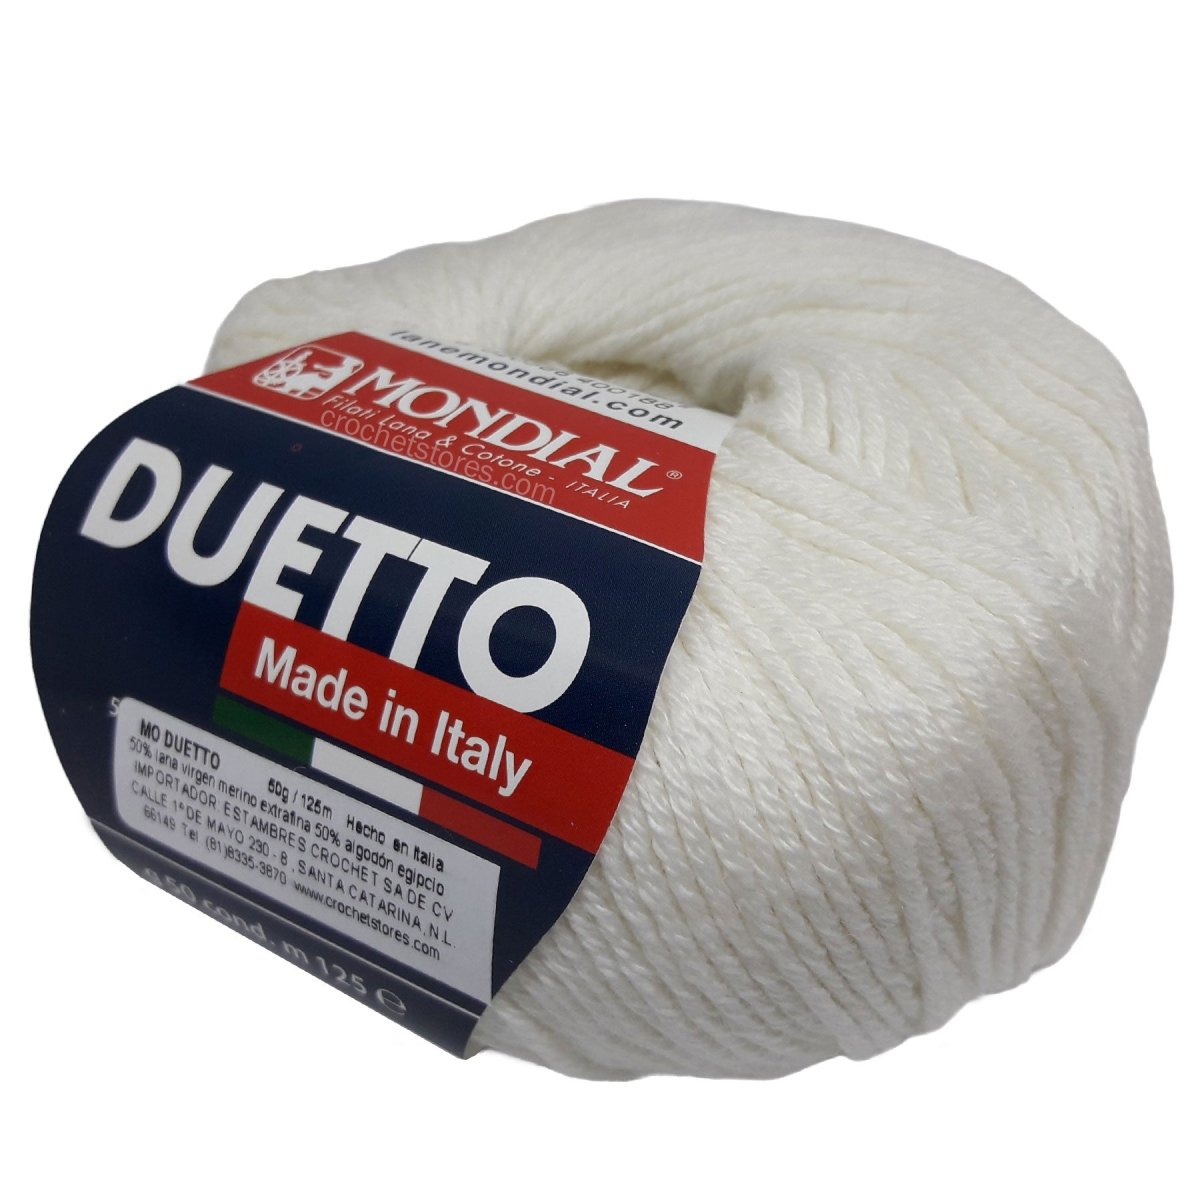 DUETTO - Crochetstores1175-1008020586400188